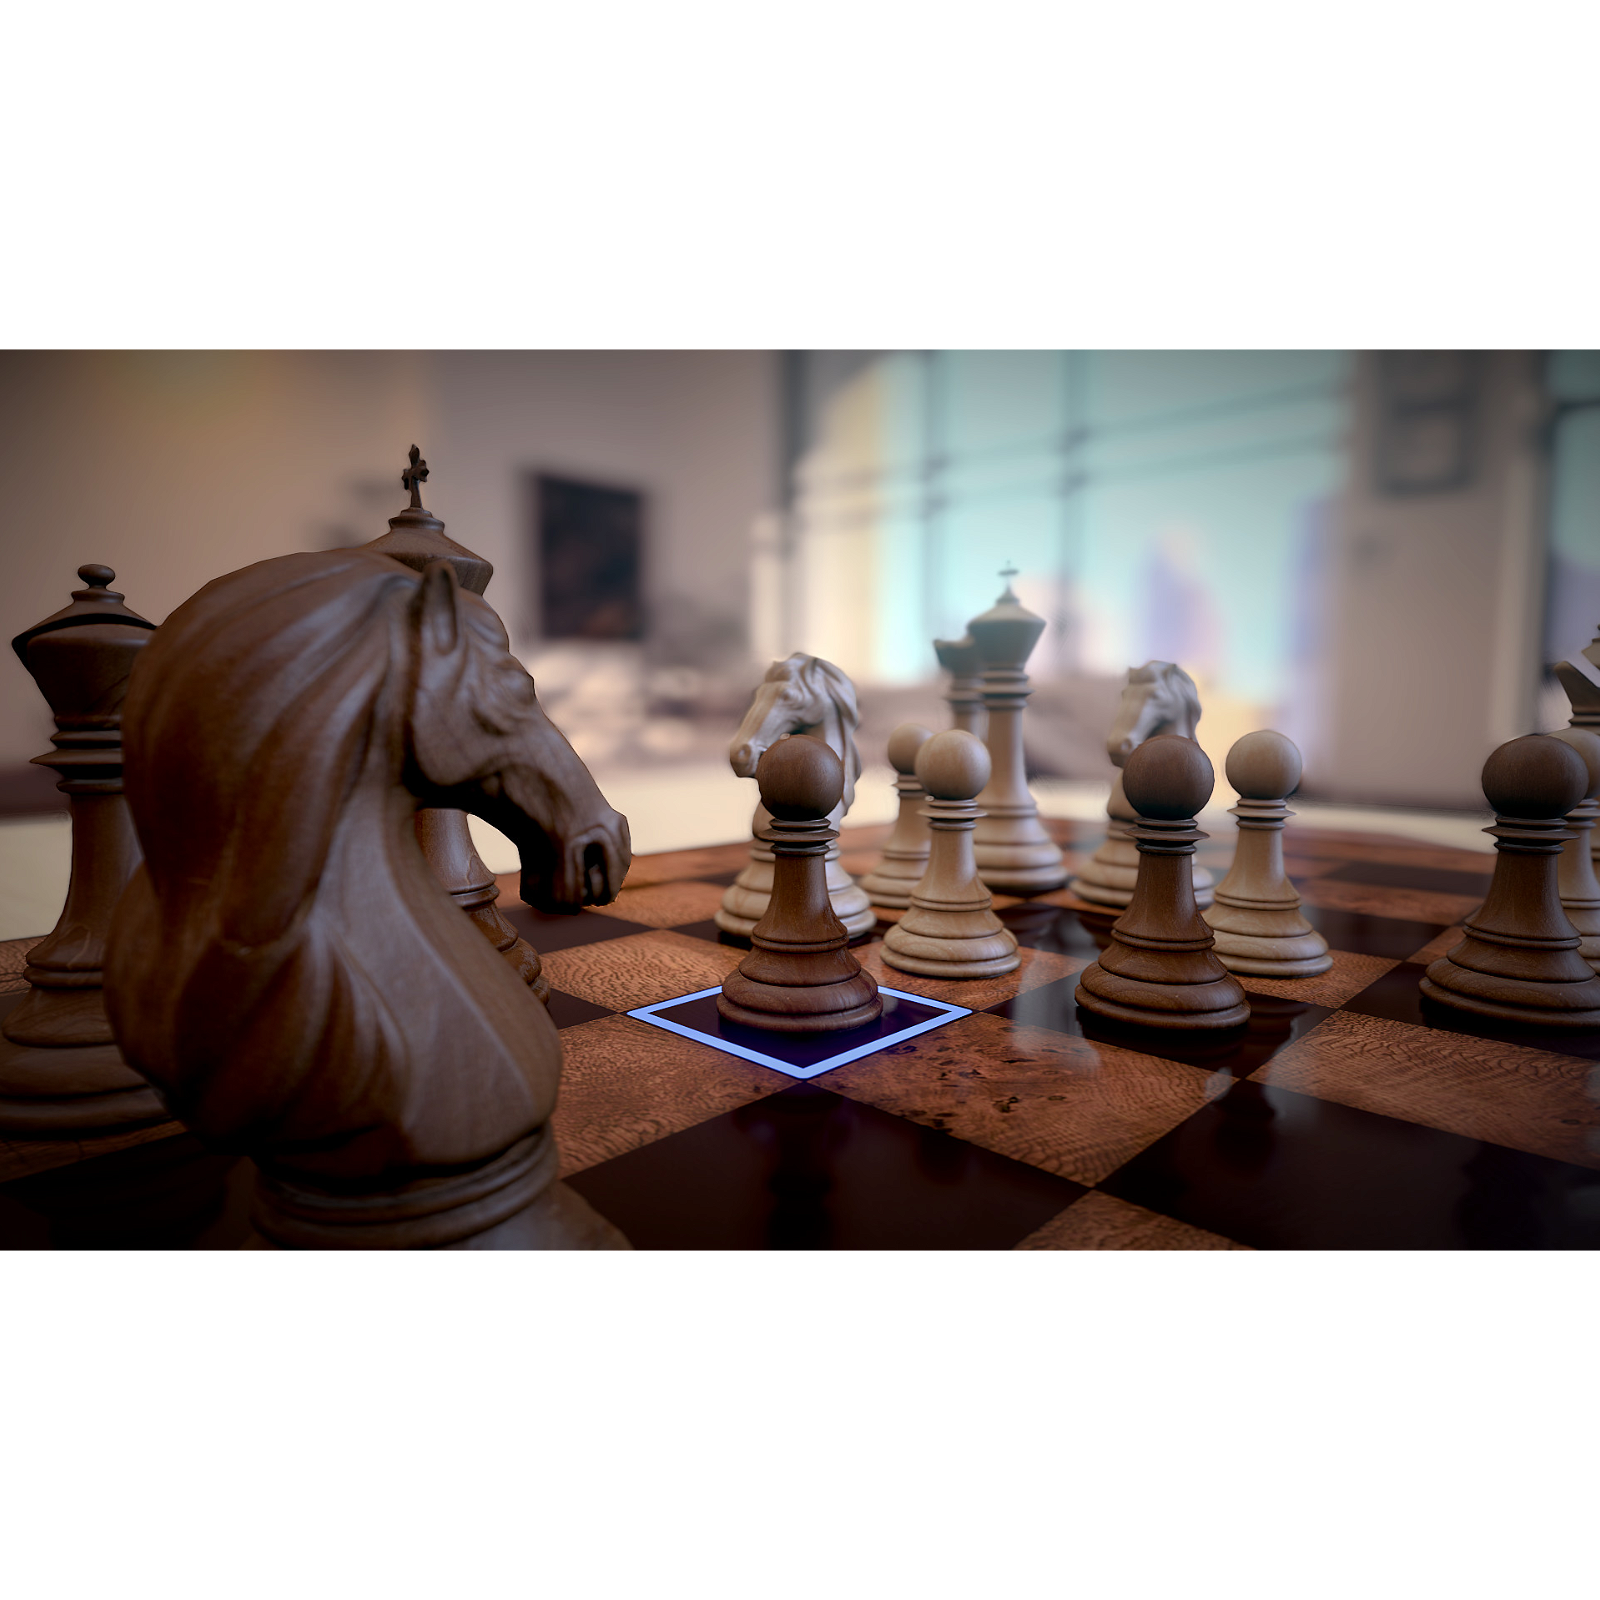 Pure Chess Grandmaster Edition on Steam